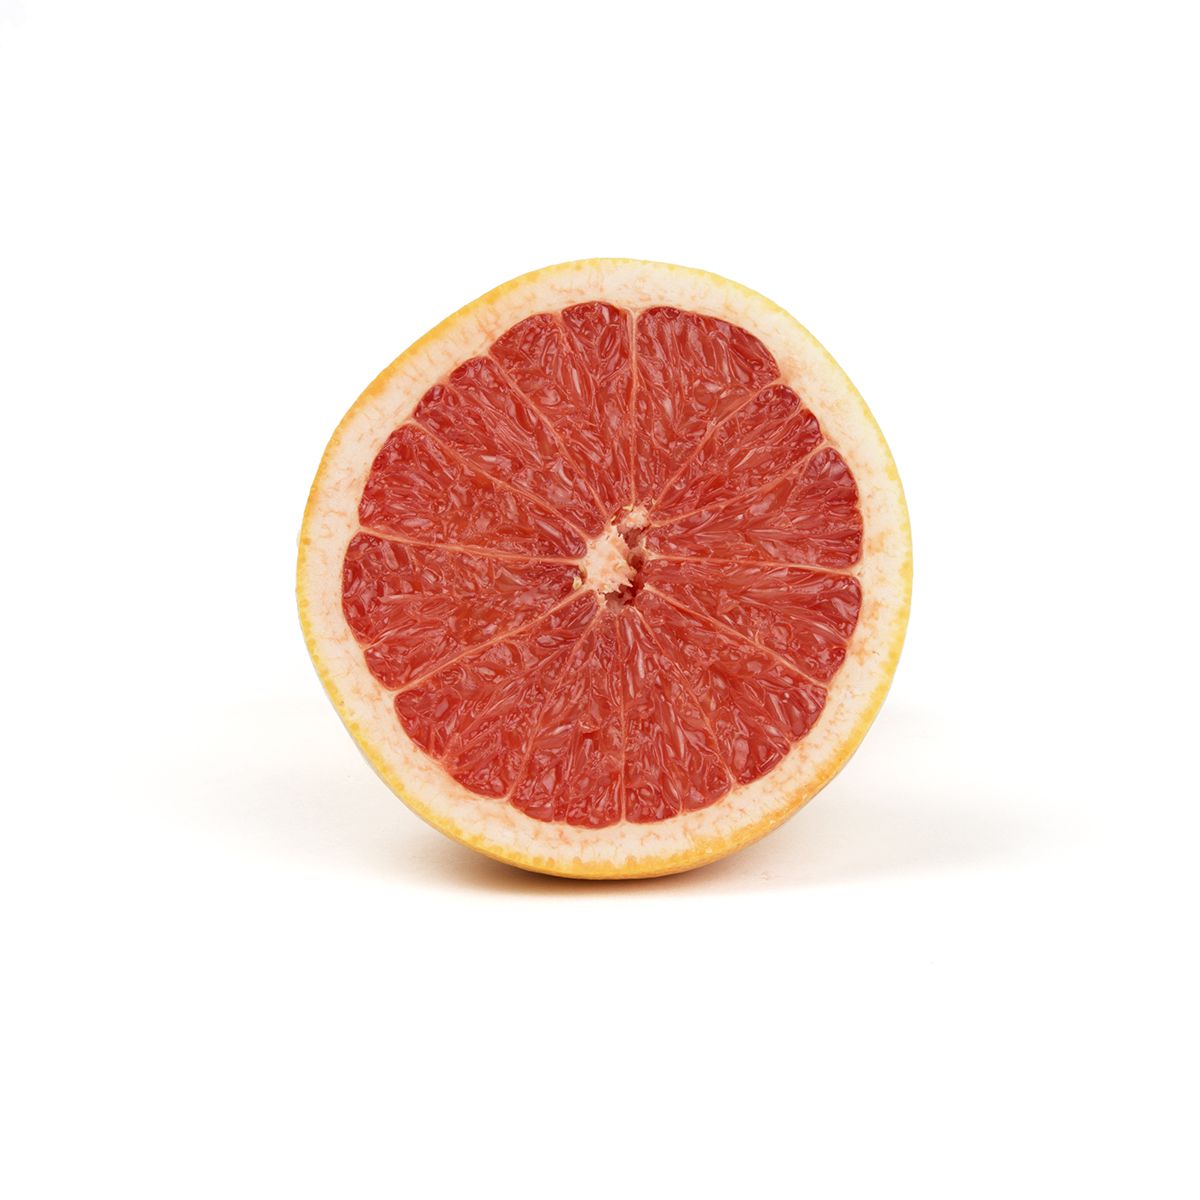 Bernard Ranches Star Ruby Grapefruit